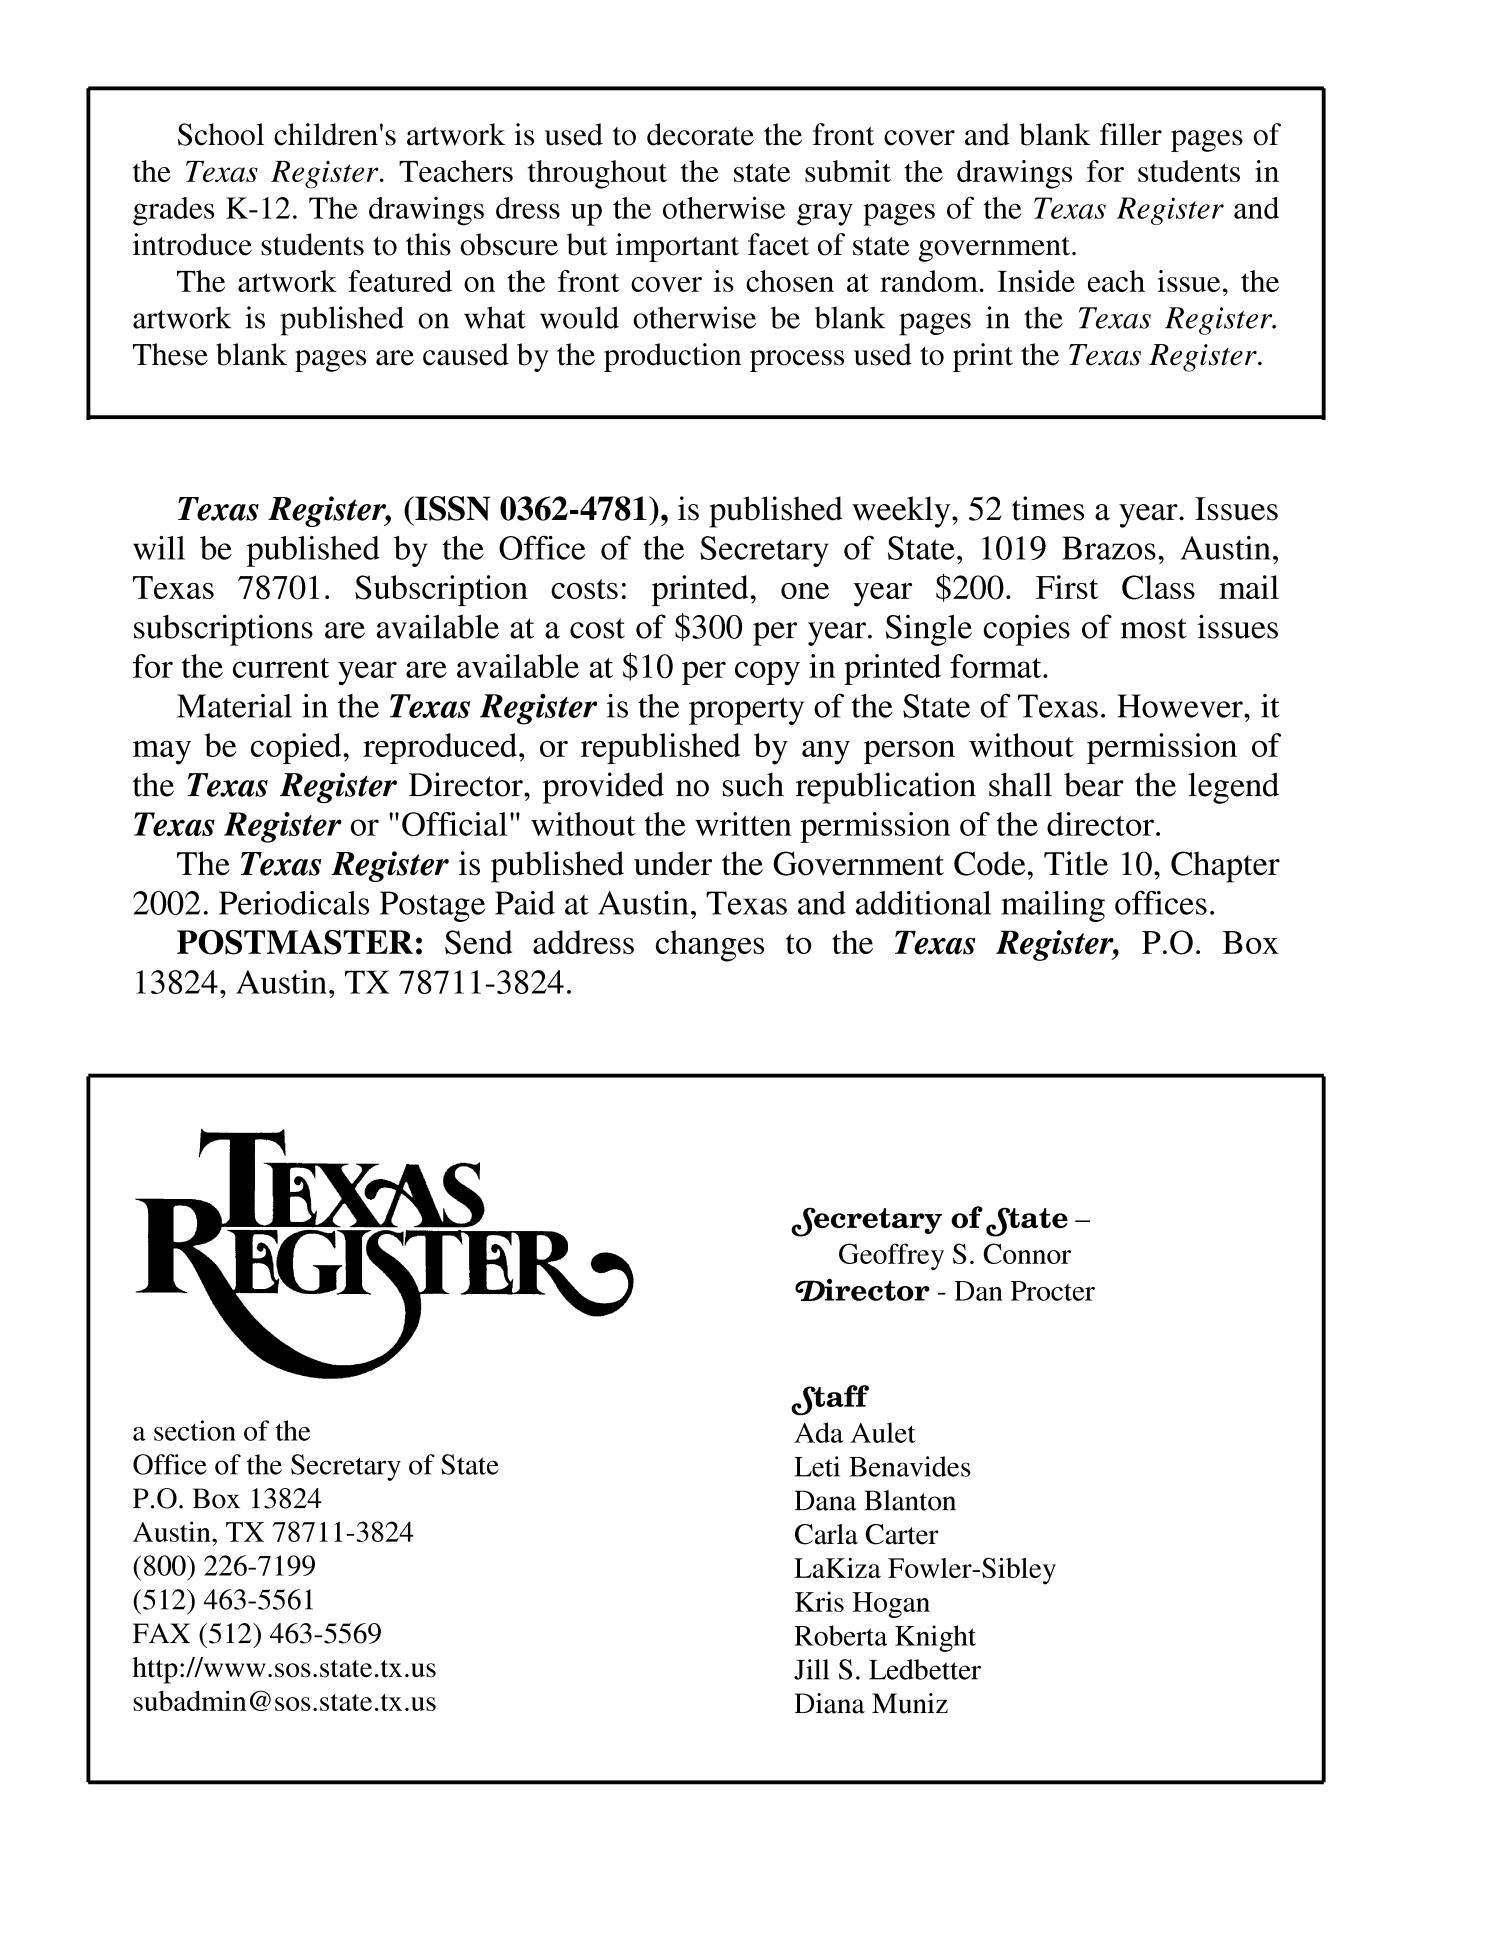 Texas Register, Volume 28, Number 40, Pages 8457-8718, October 3, 2003
                                                
                                                    8458
                                                